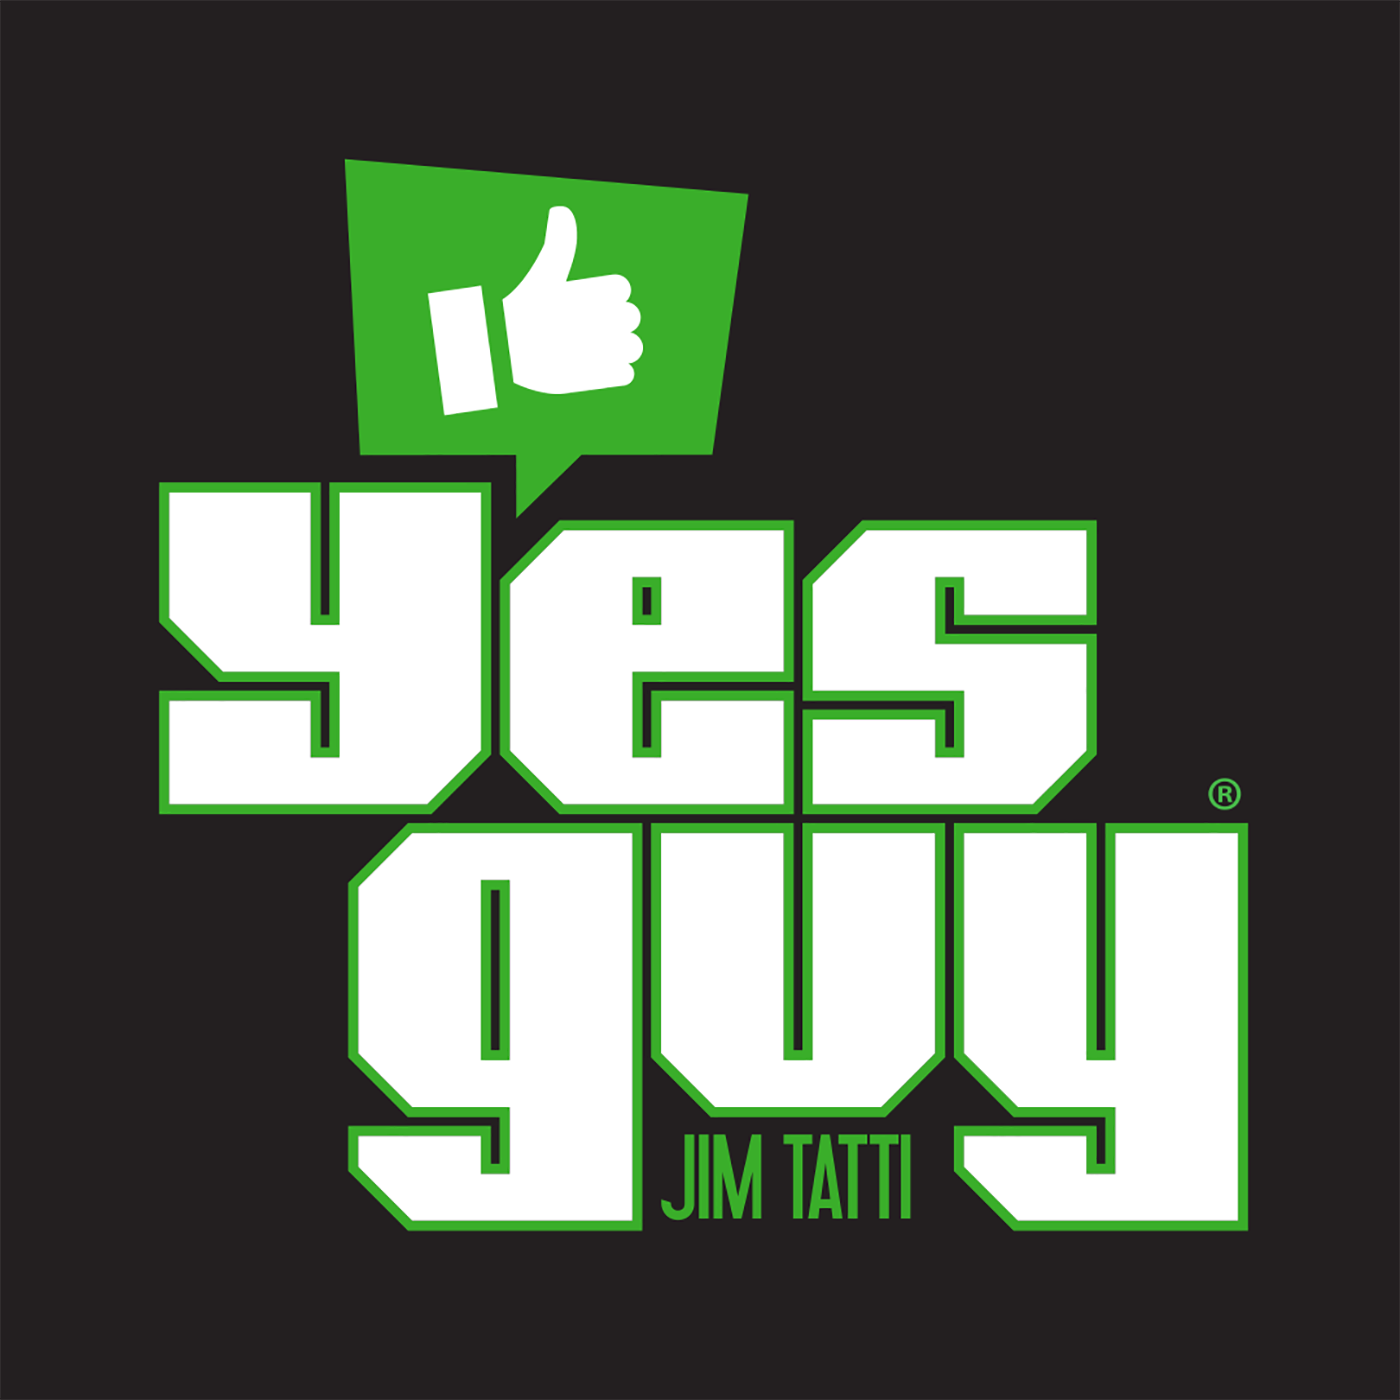 Yes Guy - April 25 - Episode 198